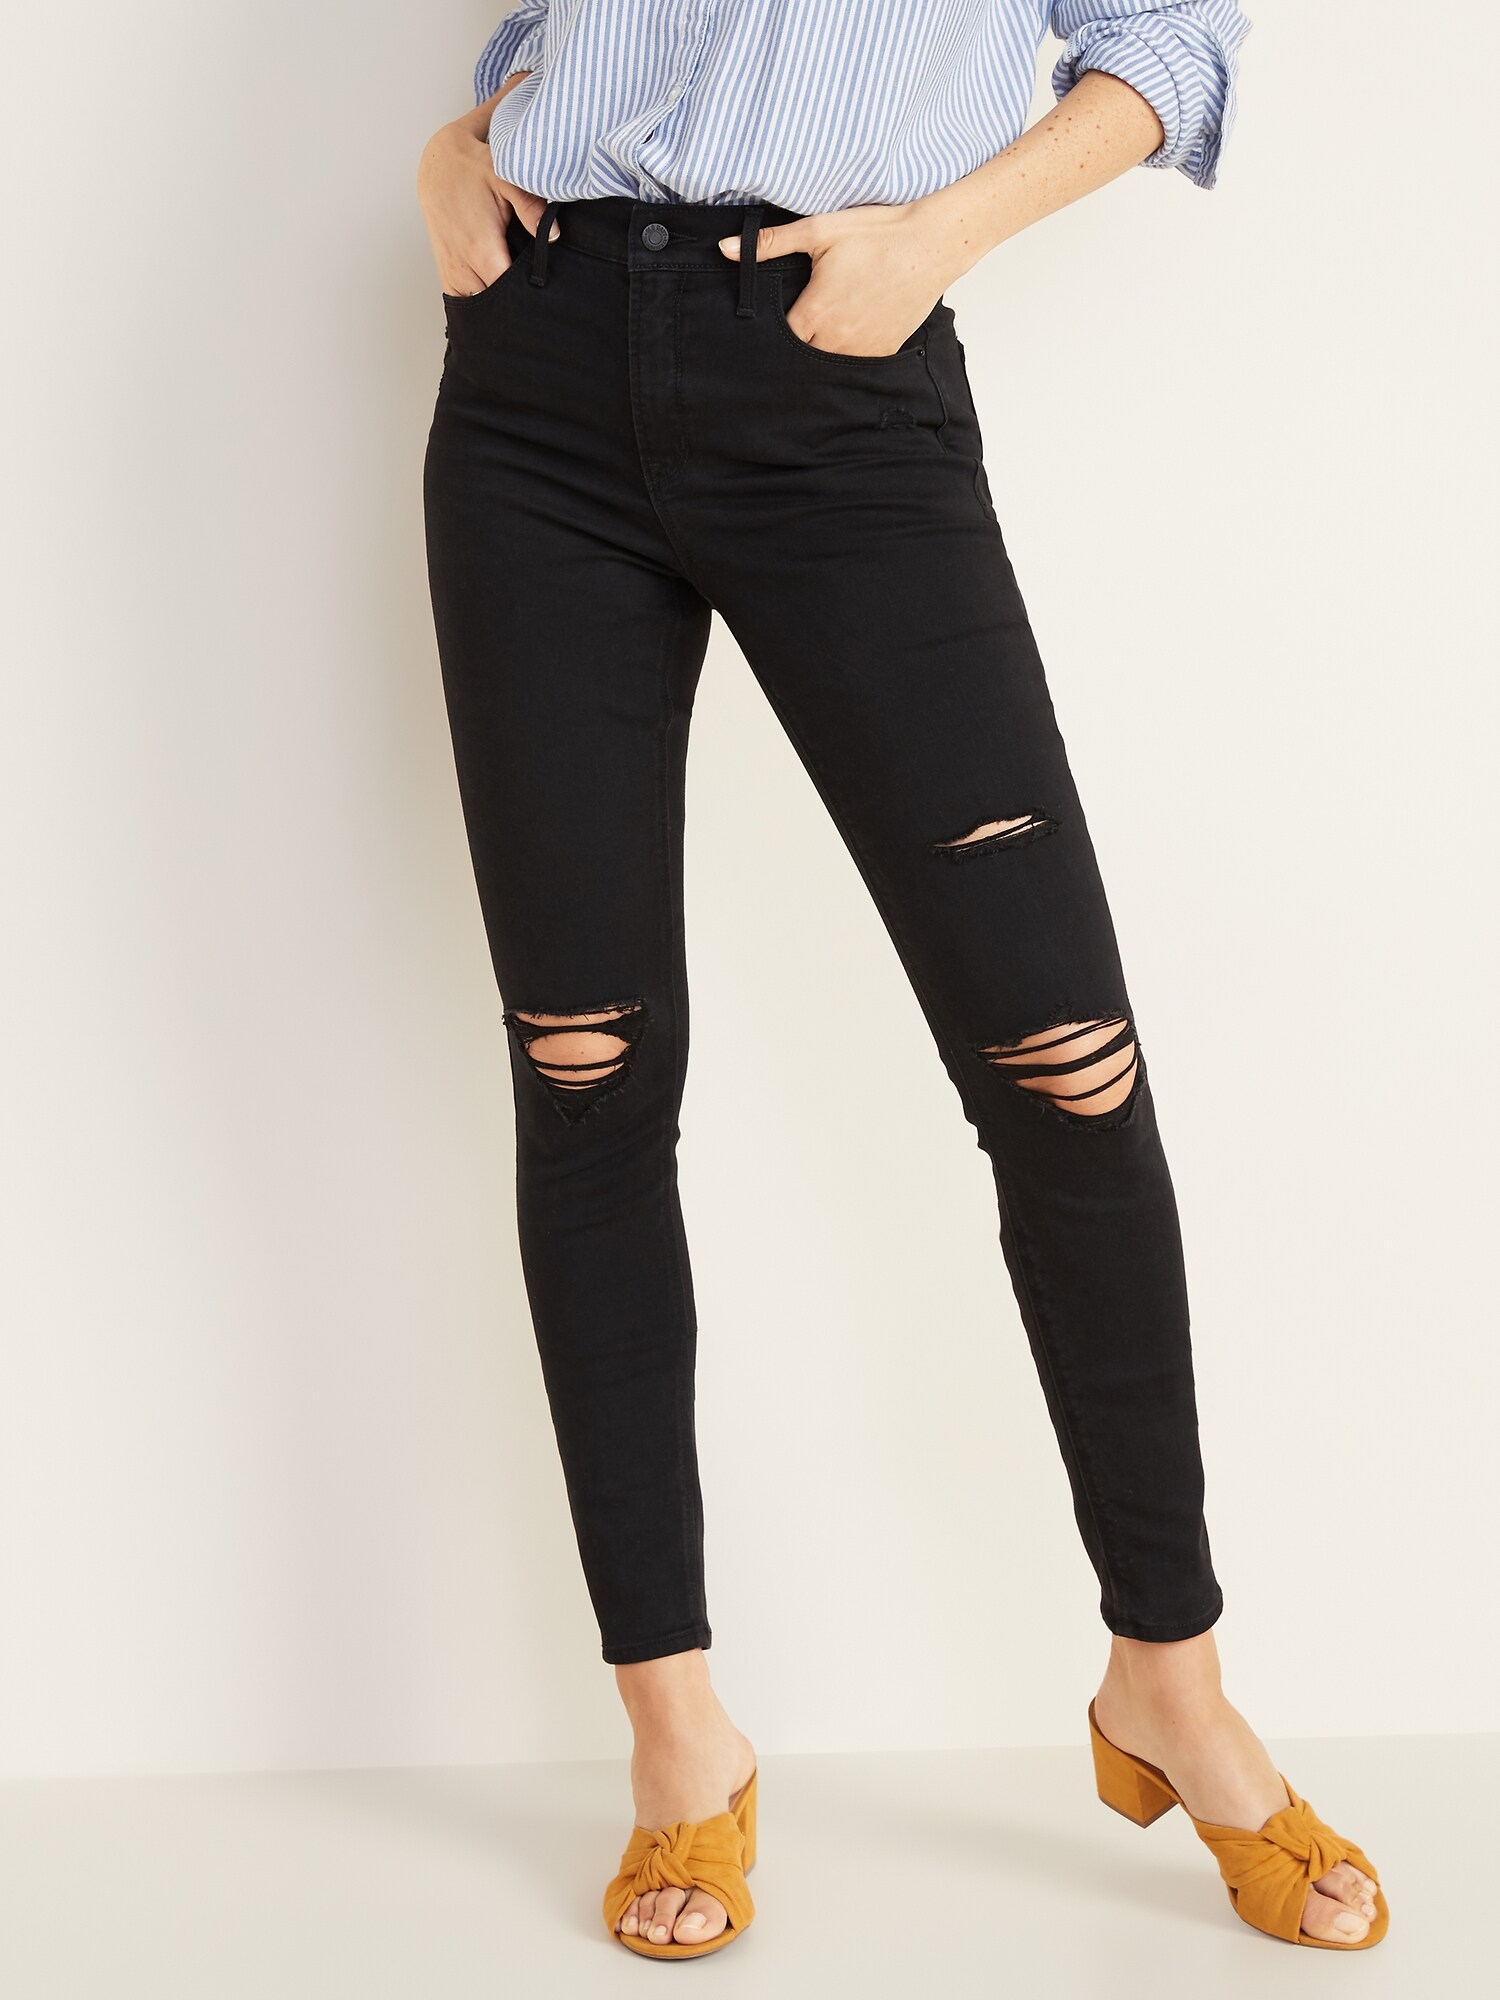 gap high waisted black jeans